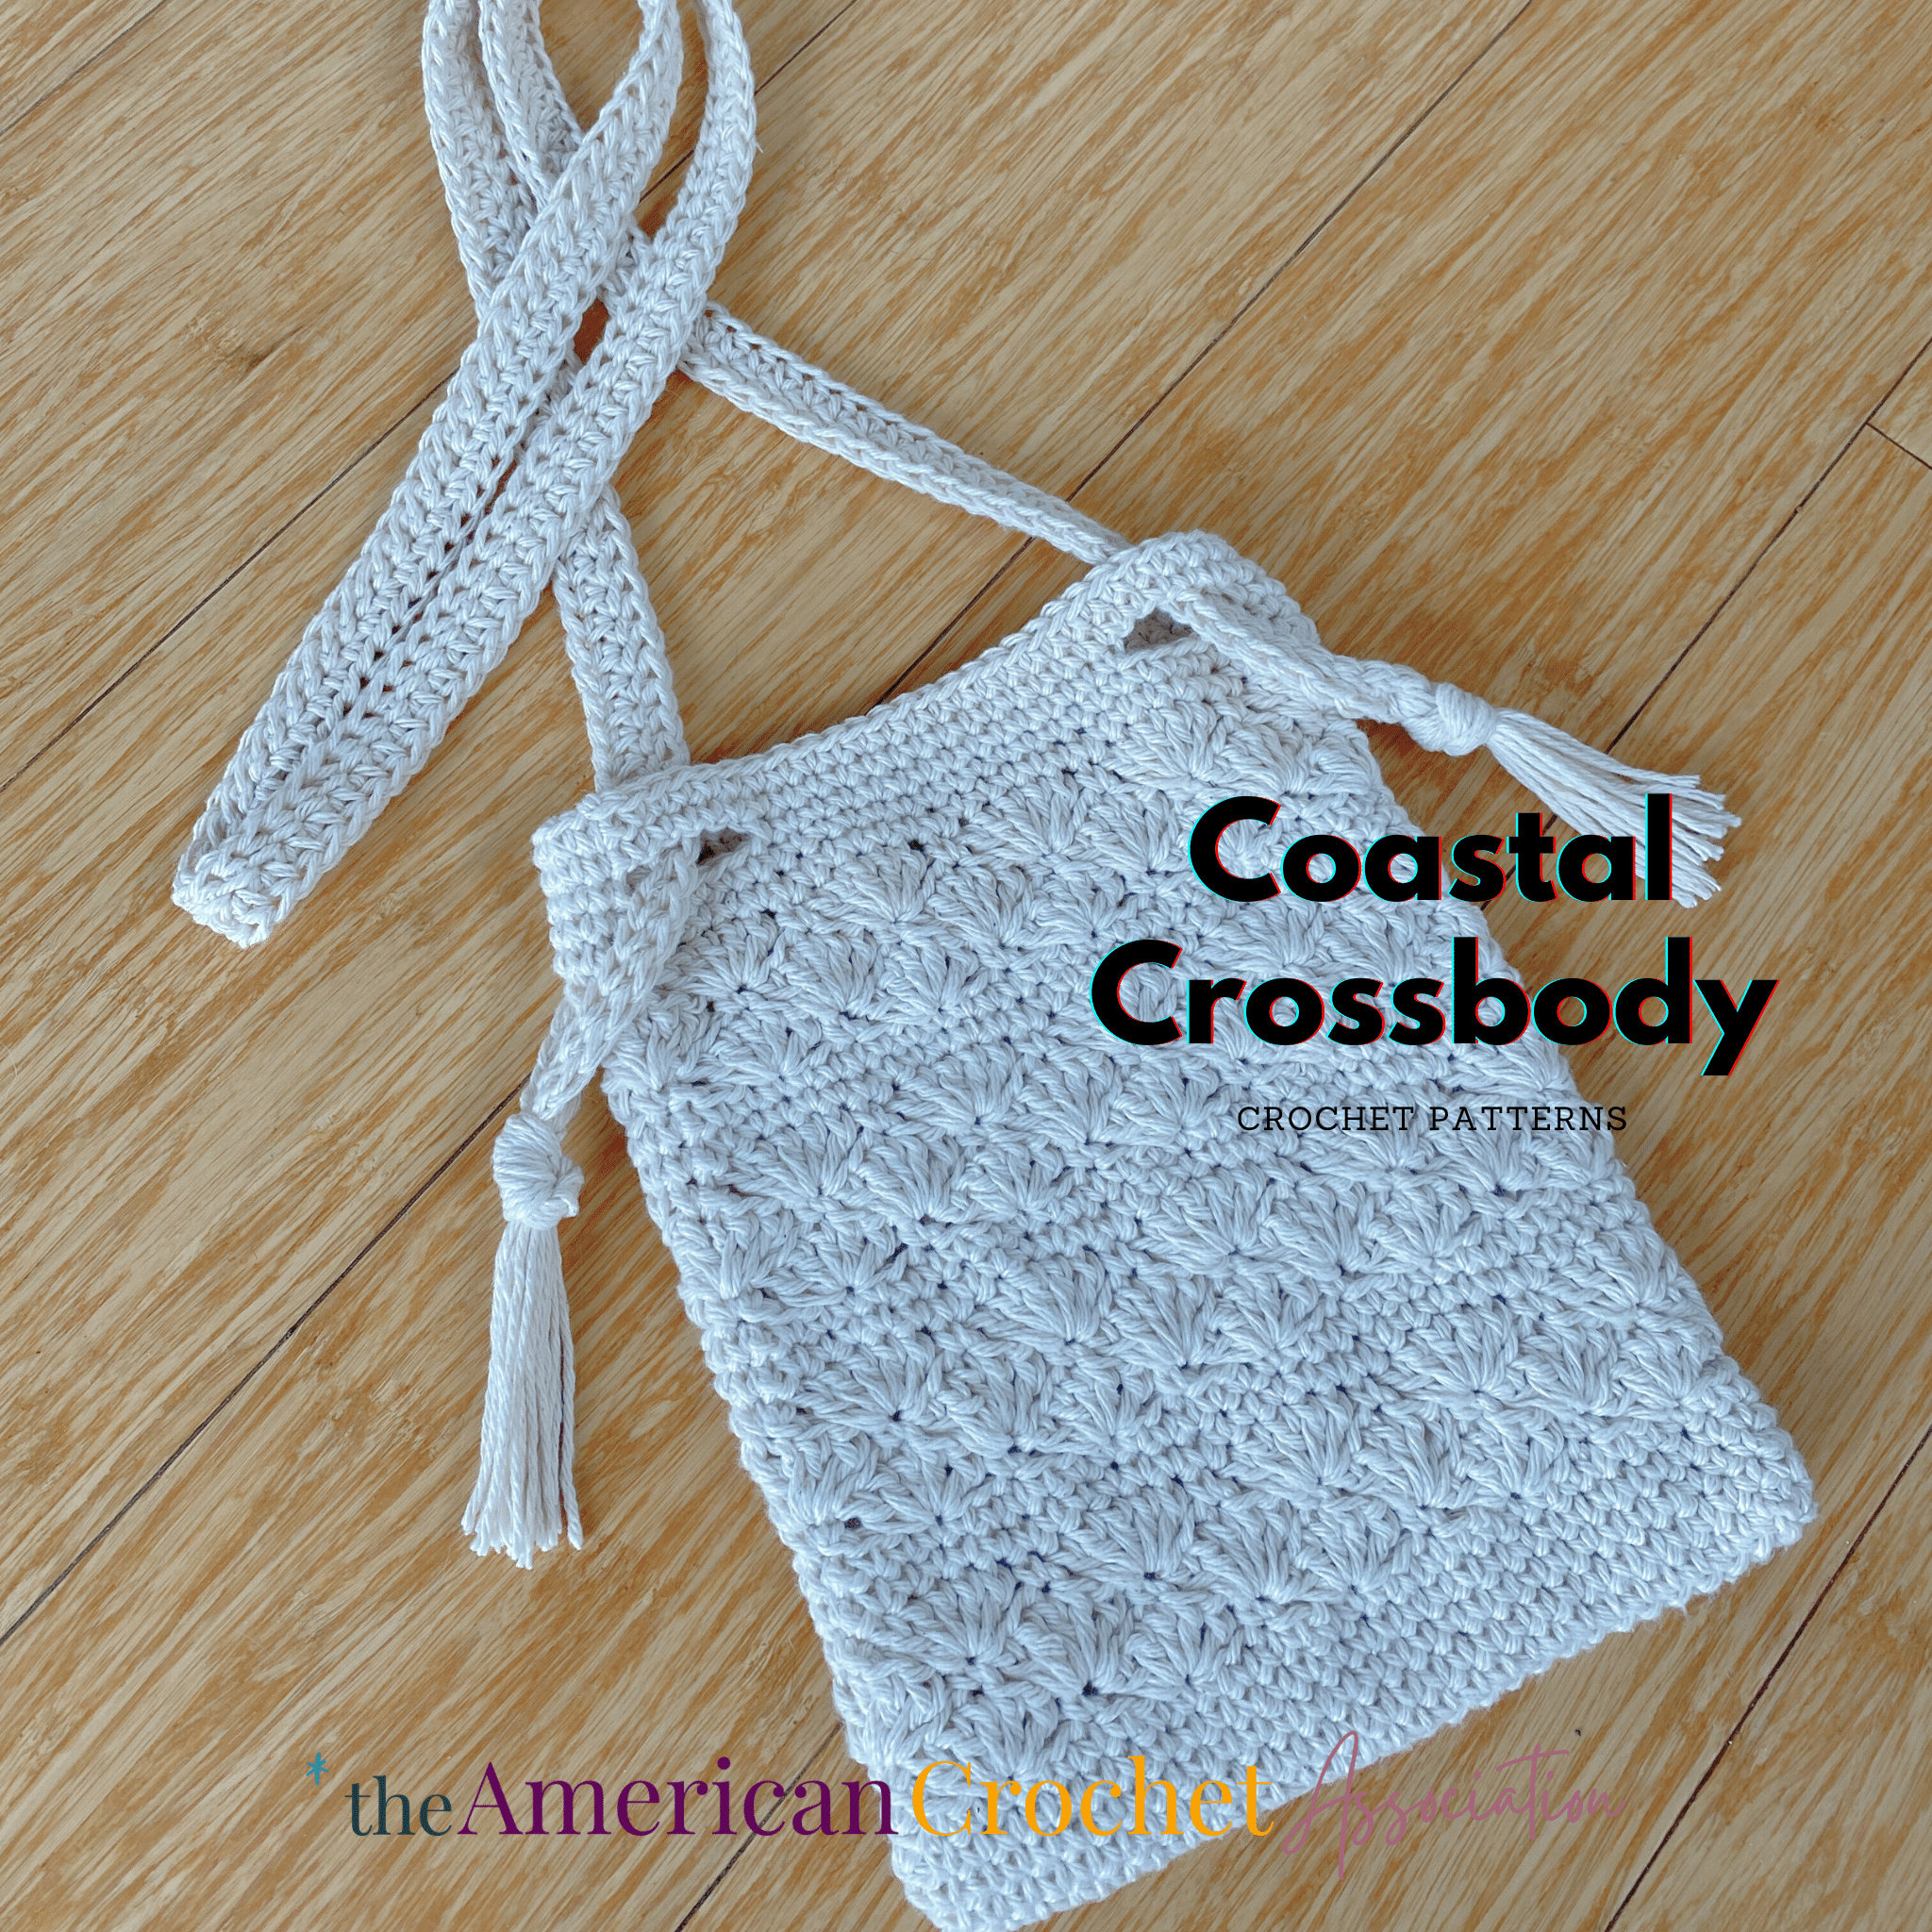 Coastal Crochet Crossbody Bag Pattern